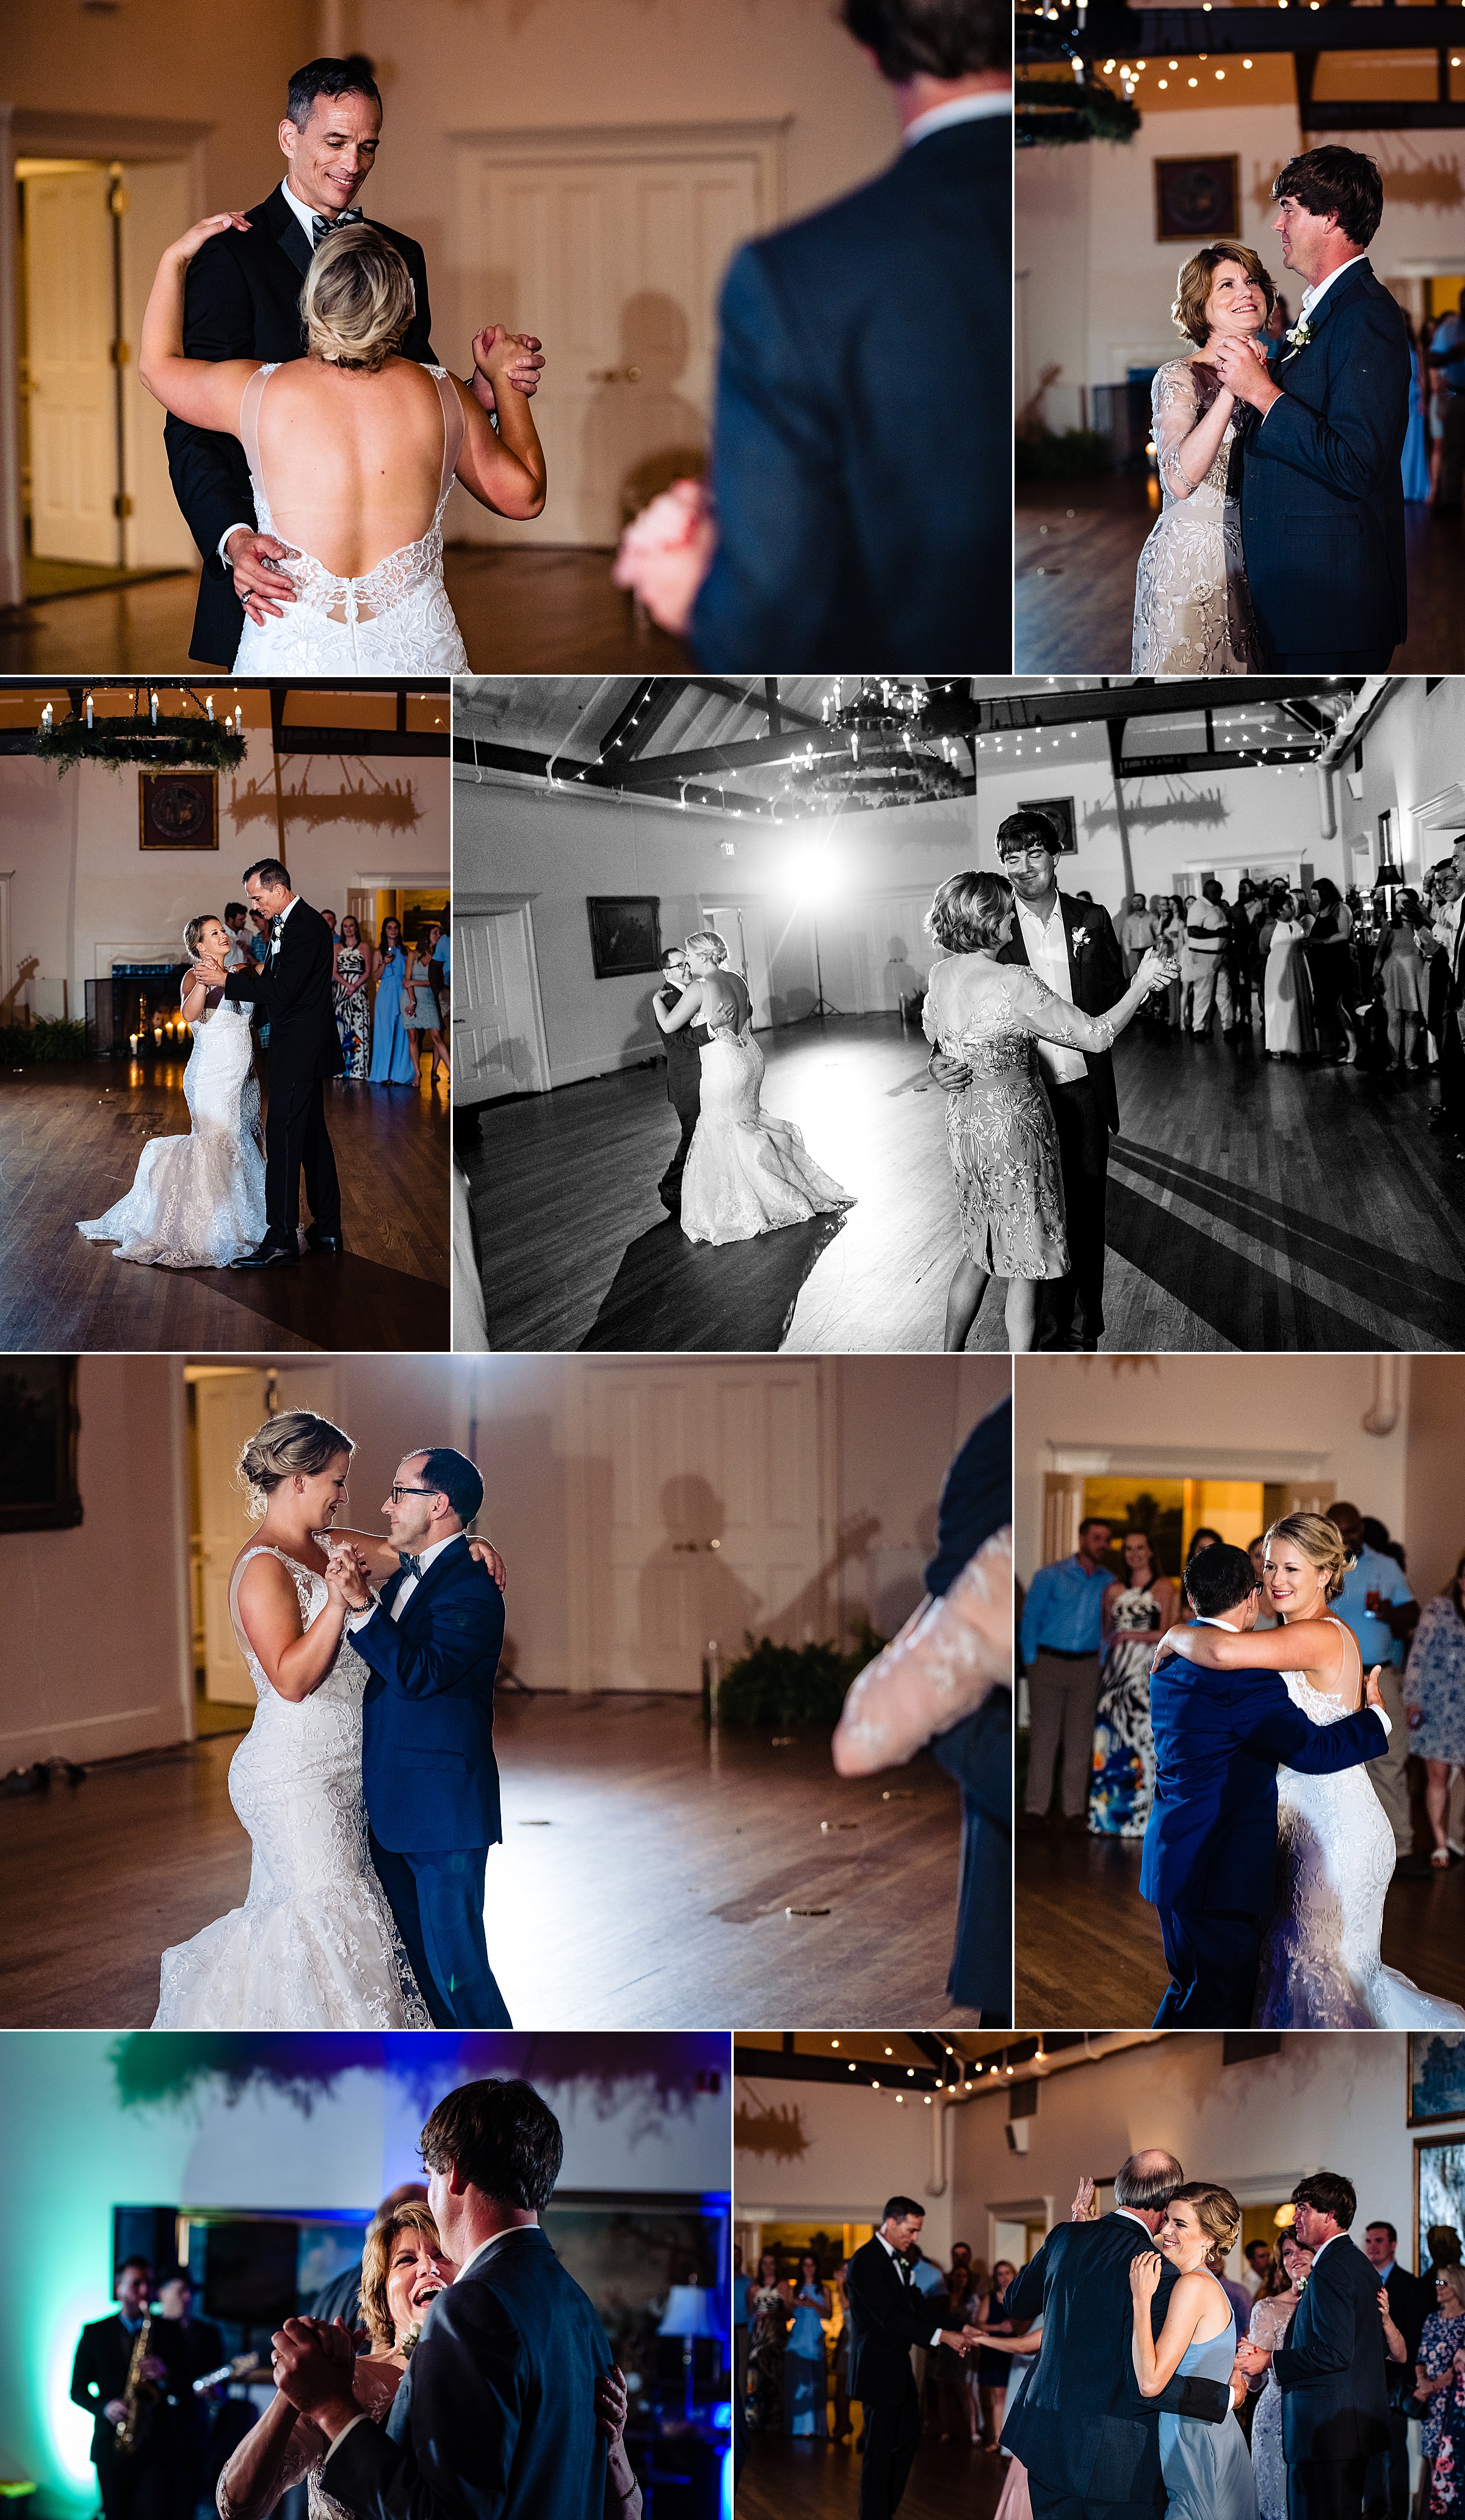 Family dance at wedding | Hope Valley Country Club Wedding, Wedding, North Carolina Wedding Photographers, Durham Wedding Photographers, Country Club Wedding | kivusandcamera.com